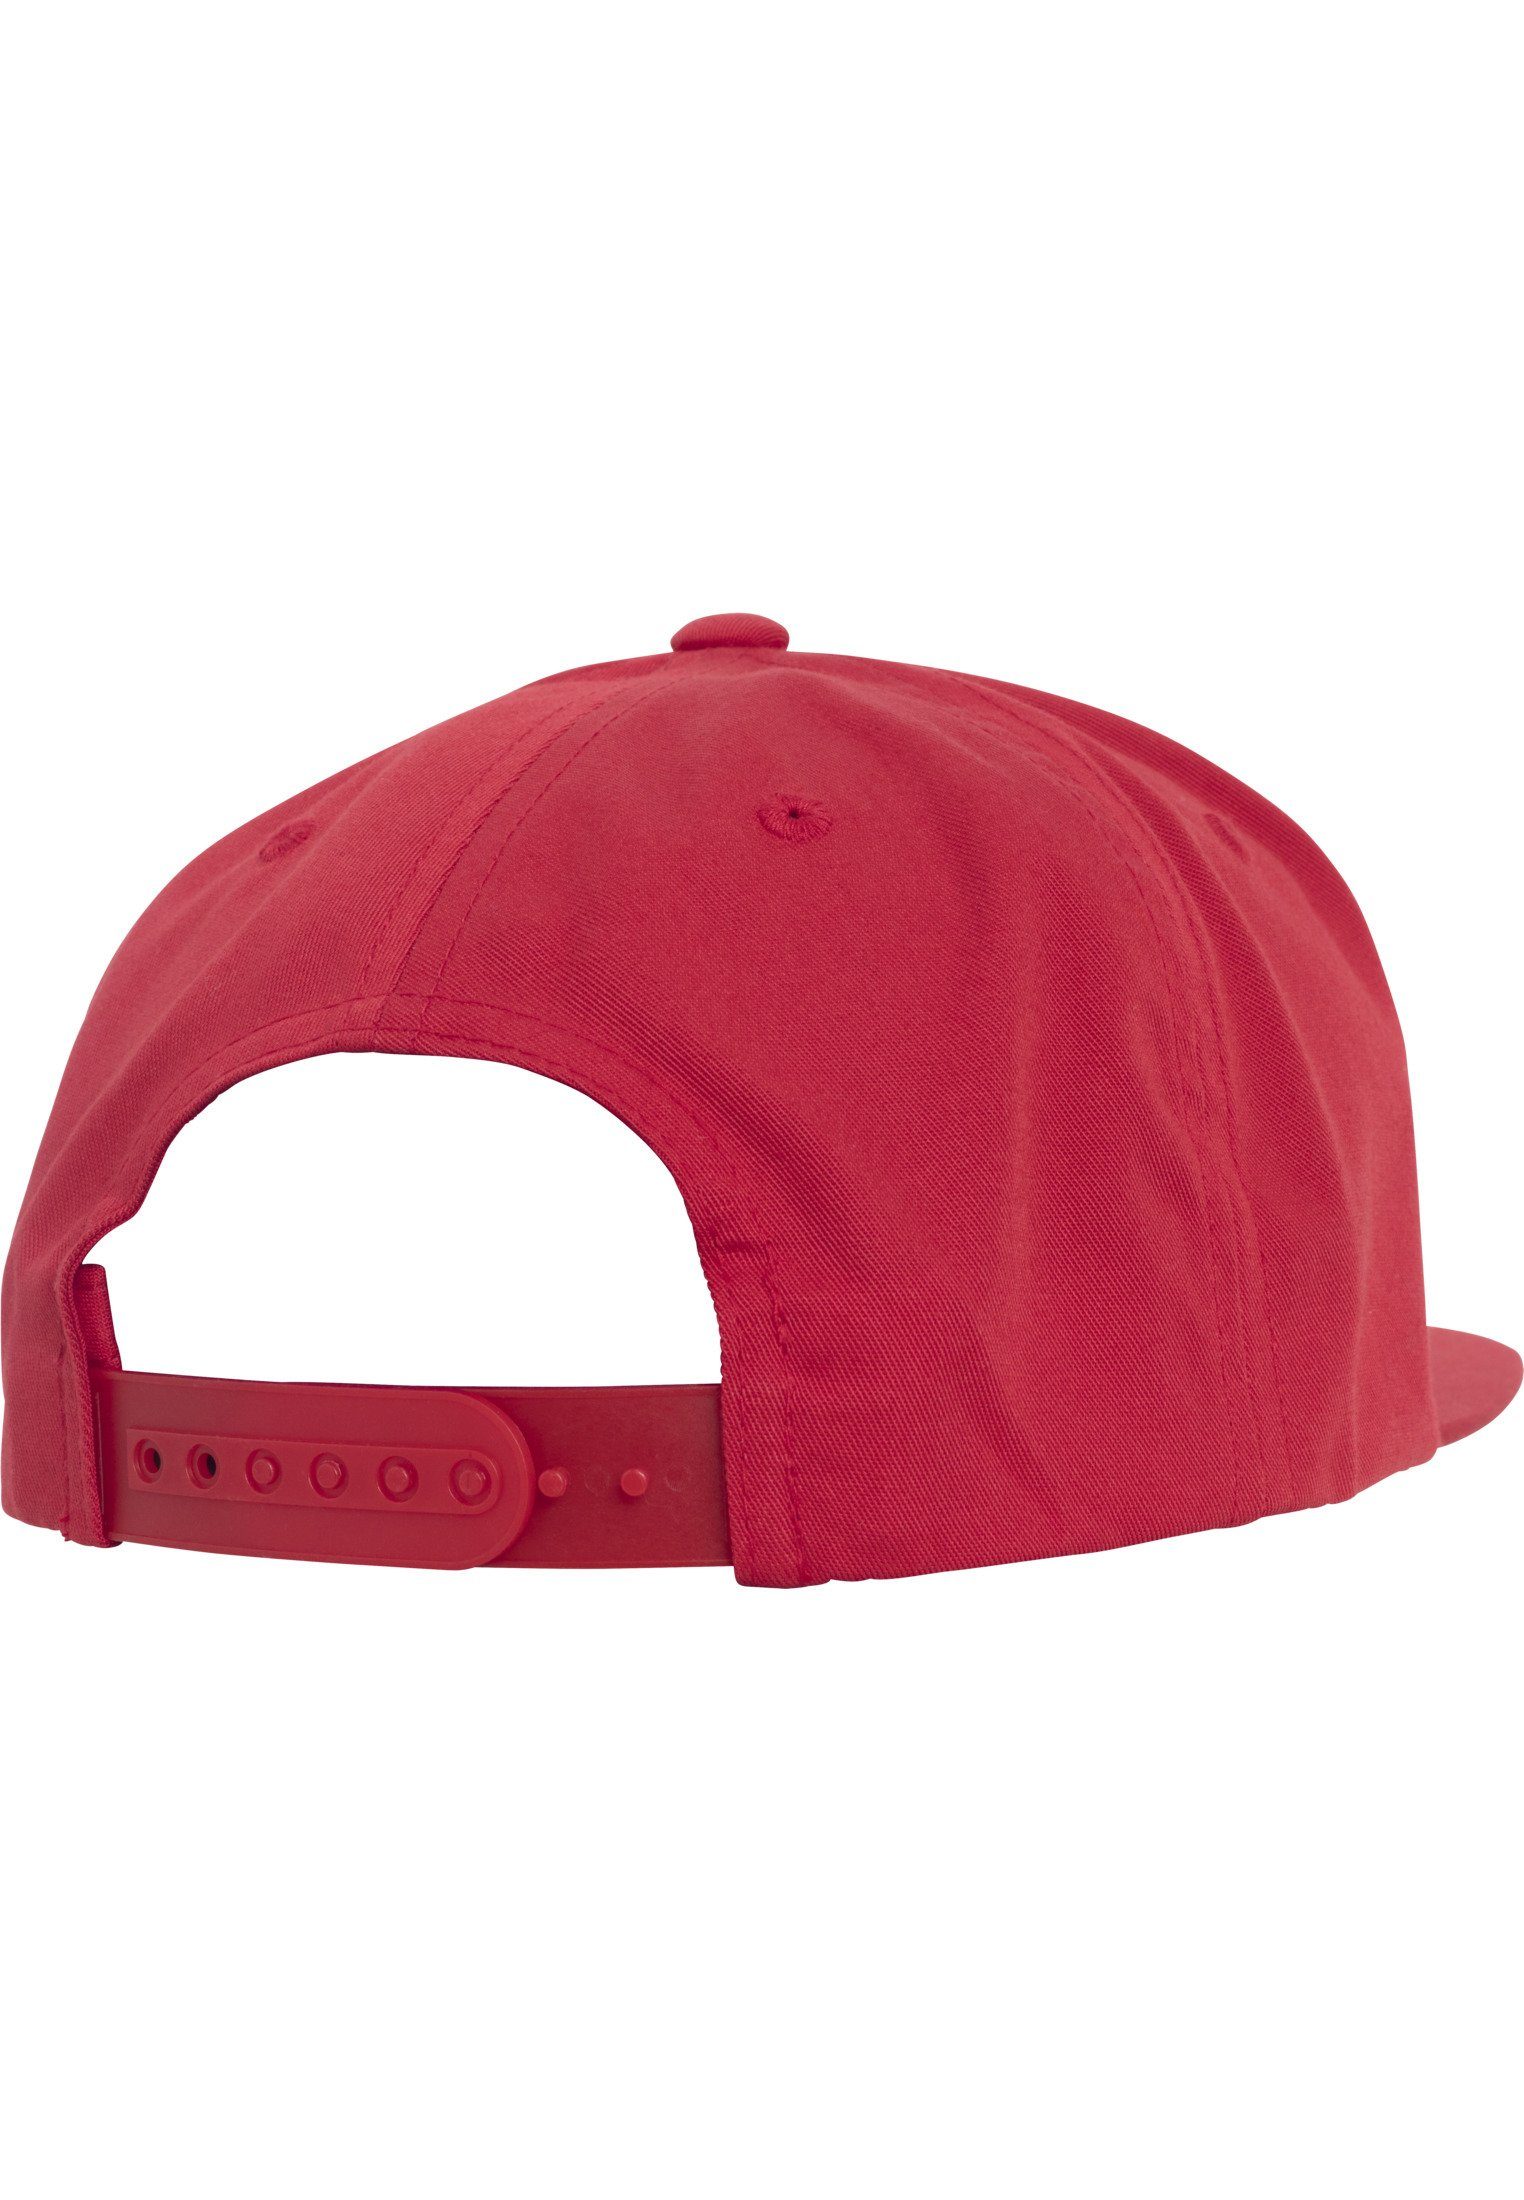 Snapback red Twill Pro-Style Youth Cap Cap Snapback Flex Flexfit